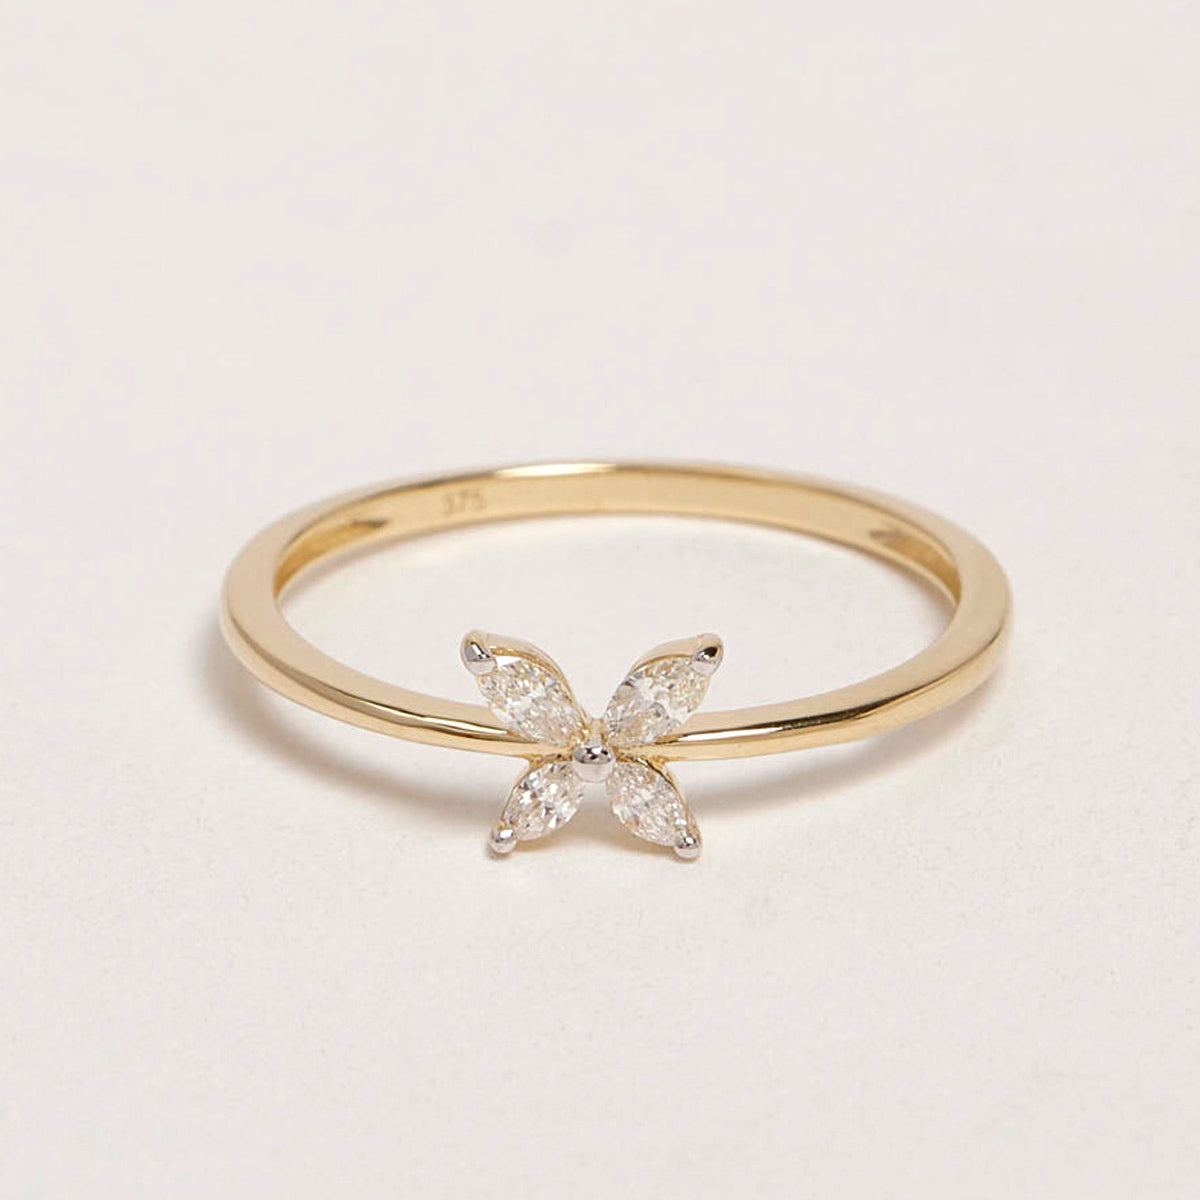 Arista 9ct Yellow Gold Diamond Ring